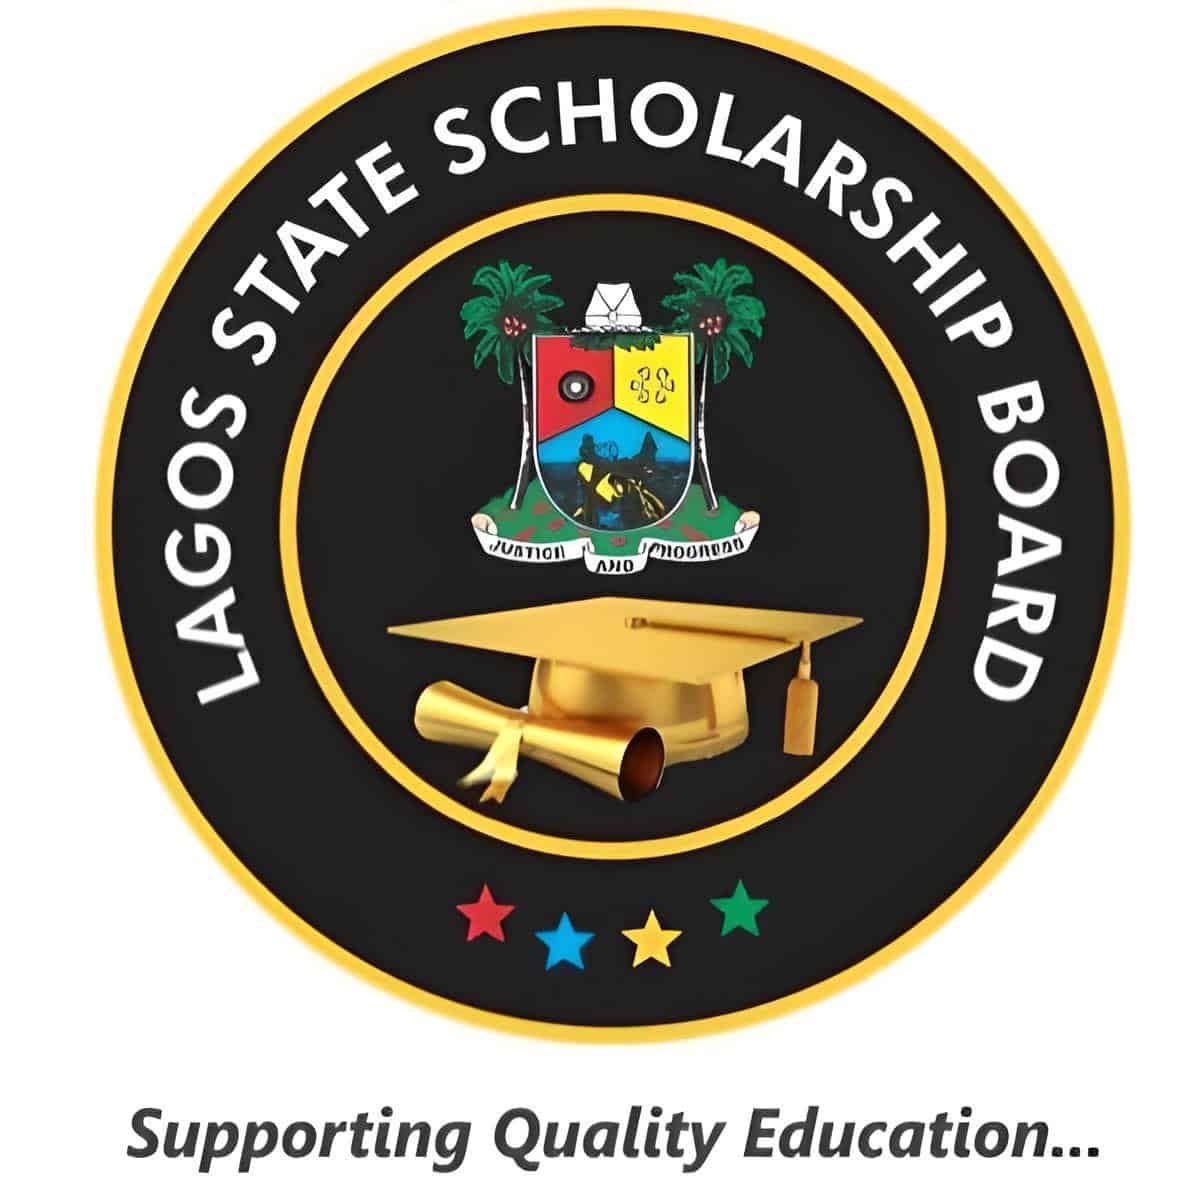 Lagos State Scholarship Board Announces Scholarship and Bursary Award